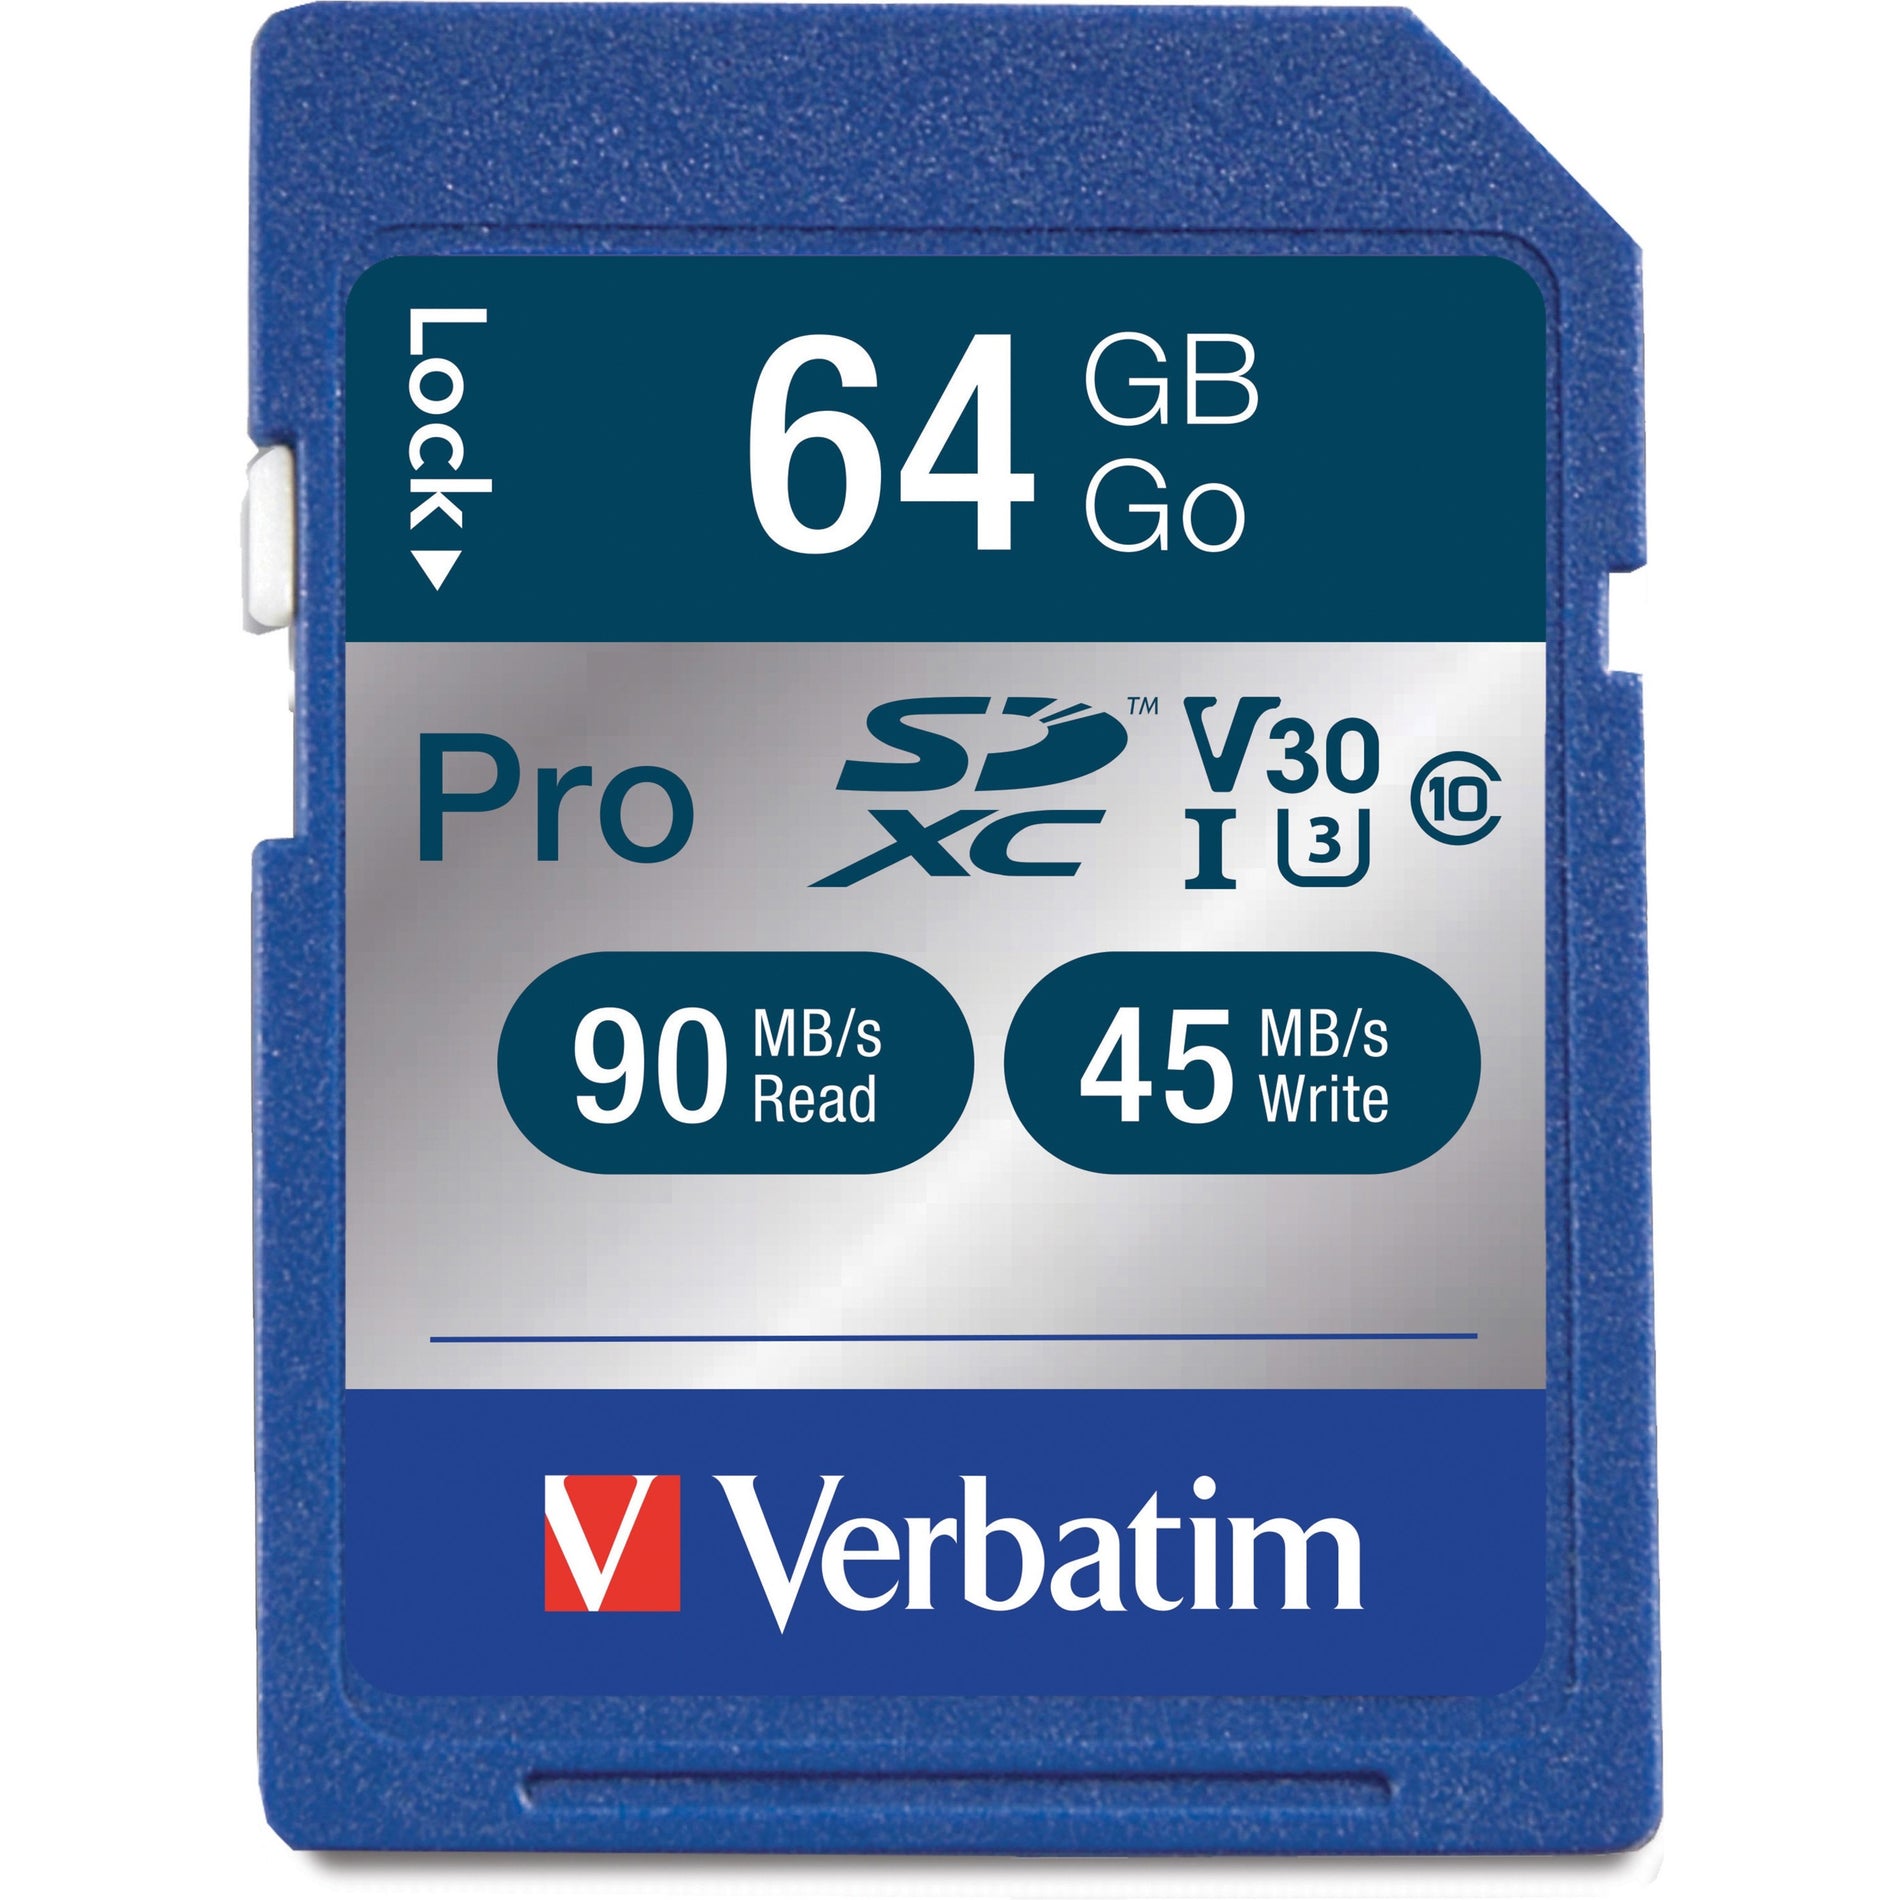 Verbatim 98670 64GB Pro 600X SDXC Memory Card, UHS-I V30 U3 Class 10, Water Resistant, Write Protection Switch